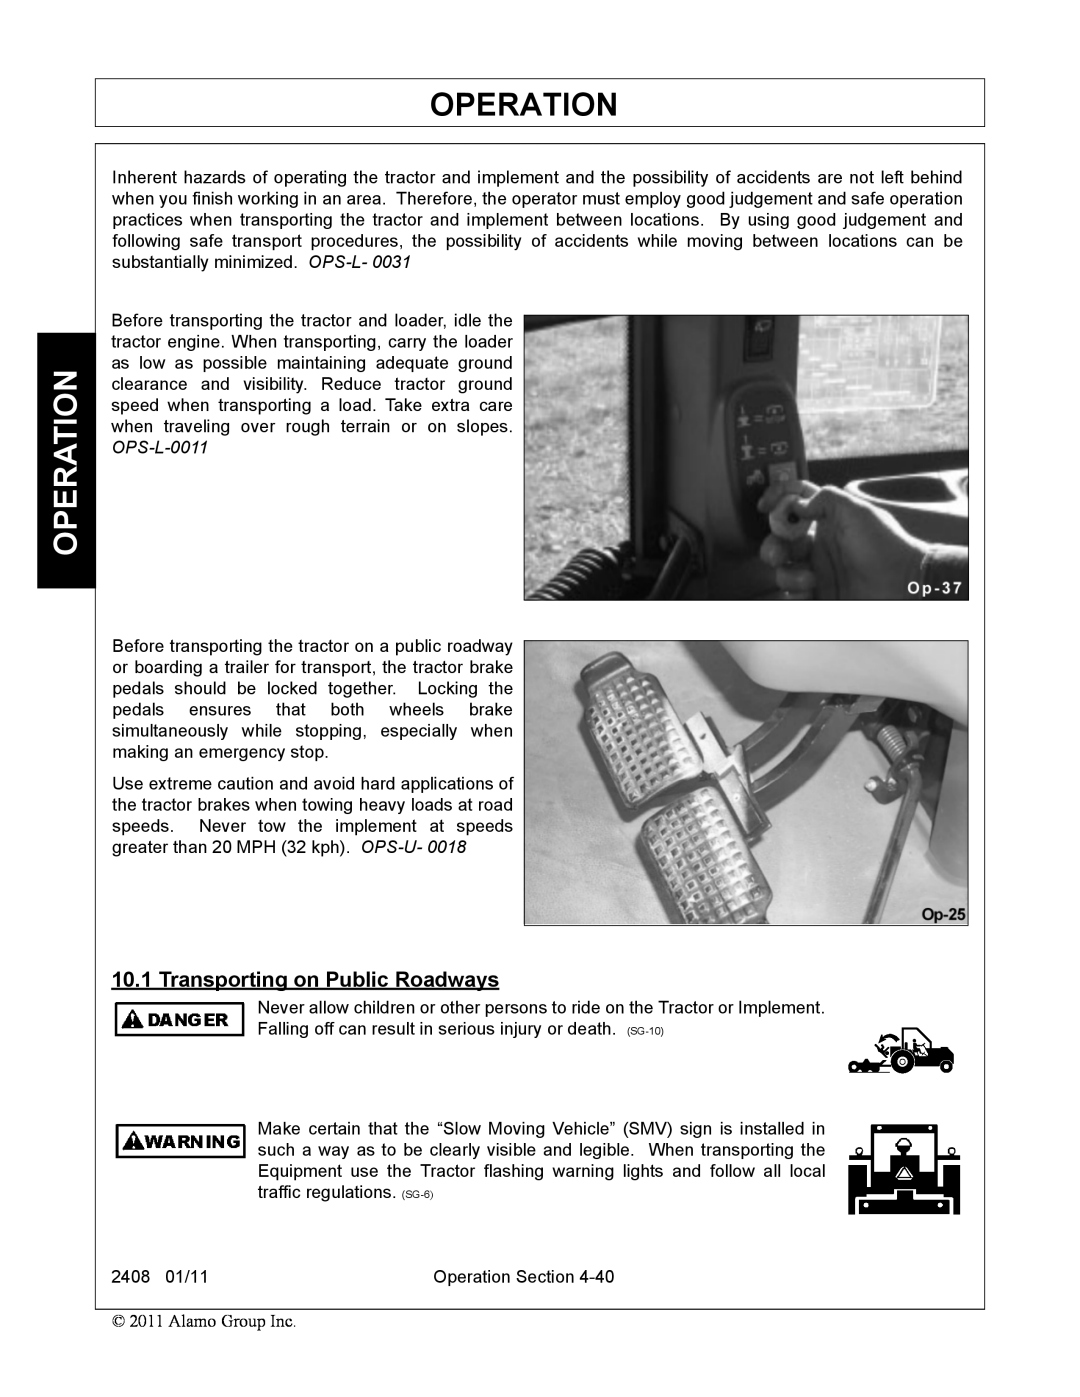 Rhino Mounts 2408 manual Operation, Transporting on Public Roadways 